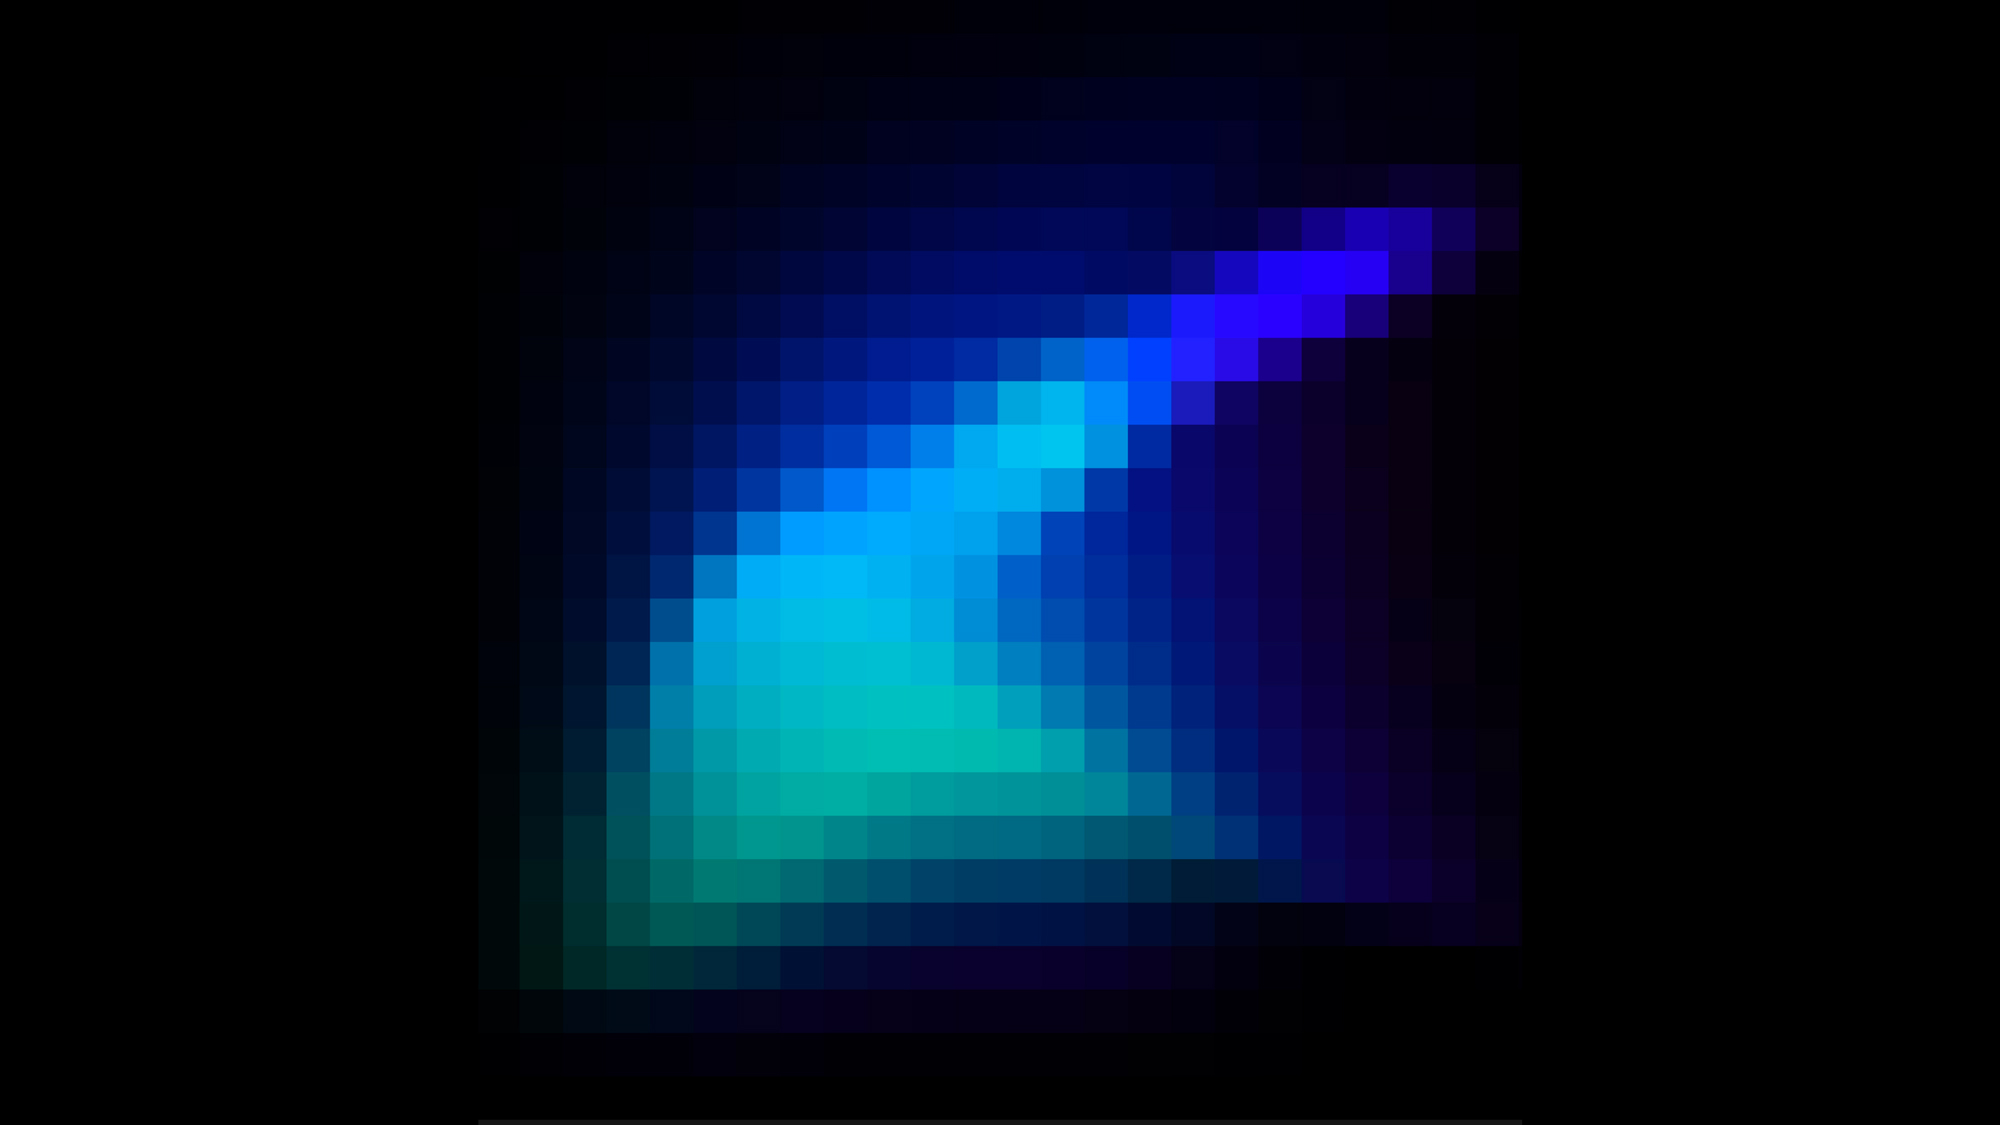 gradient of blue aurora borealis pixelated